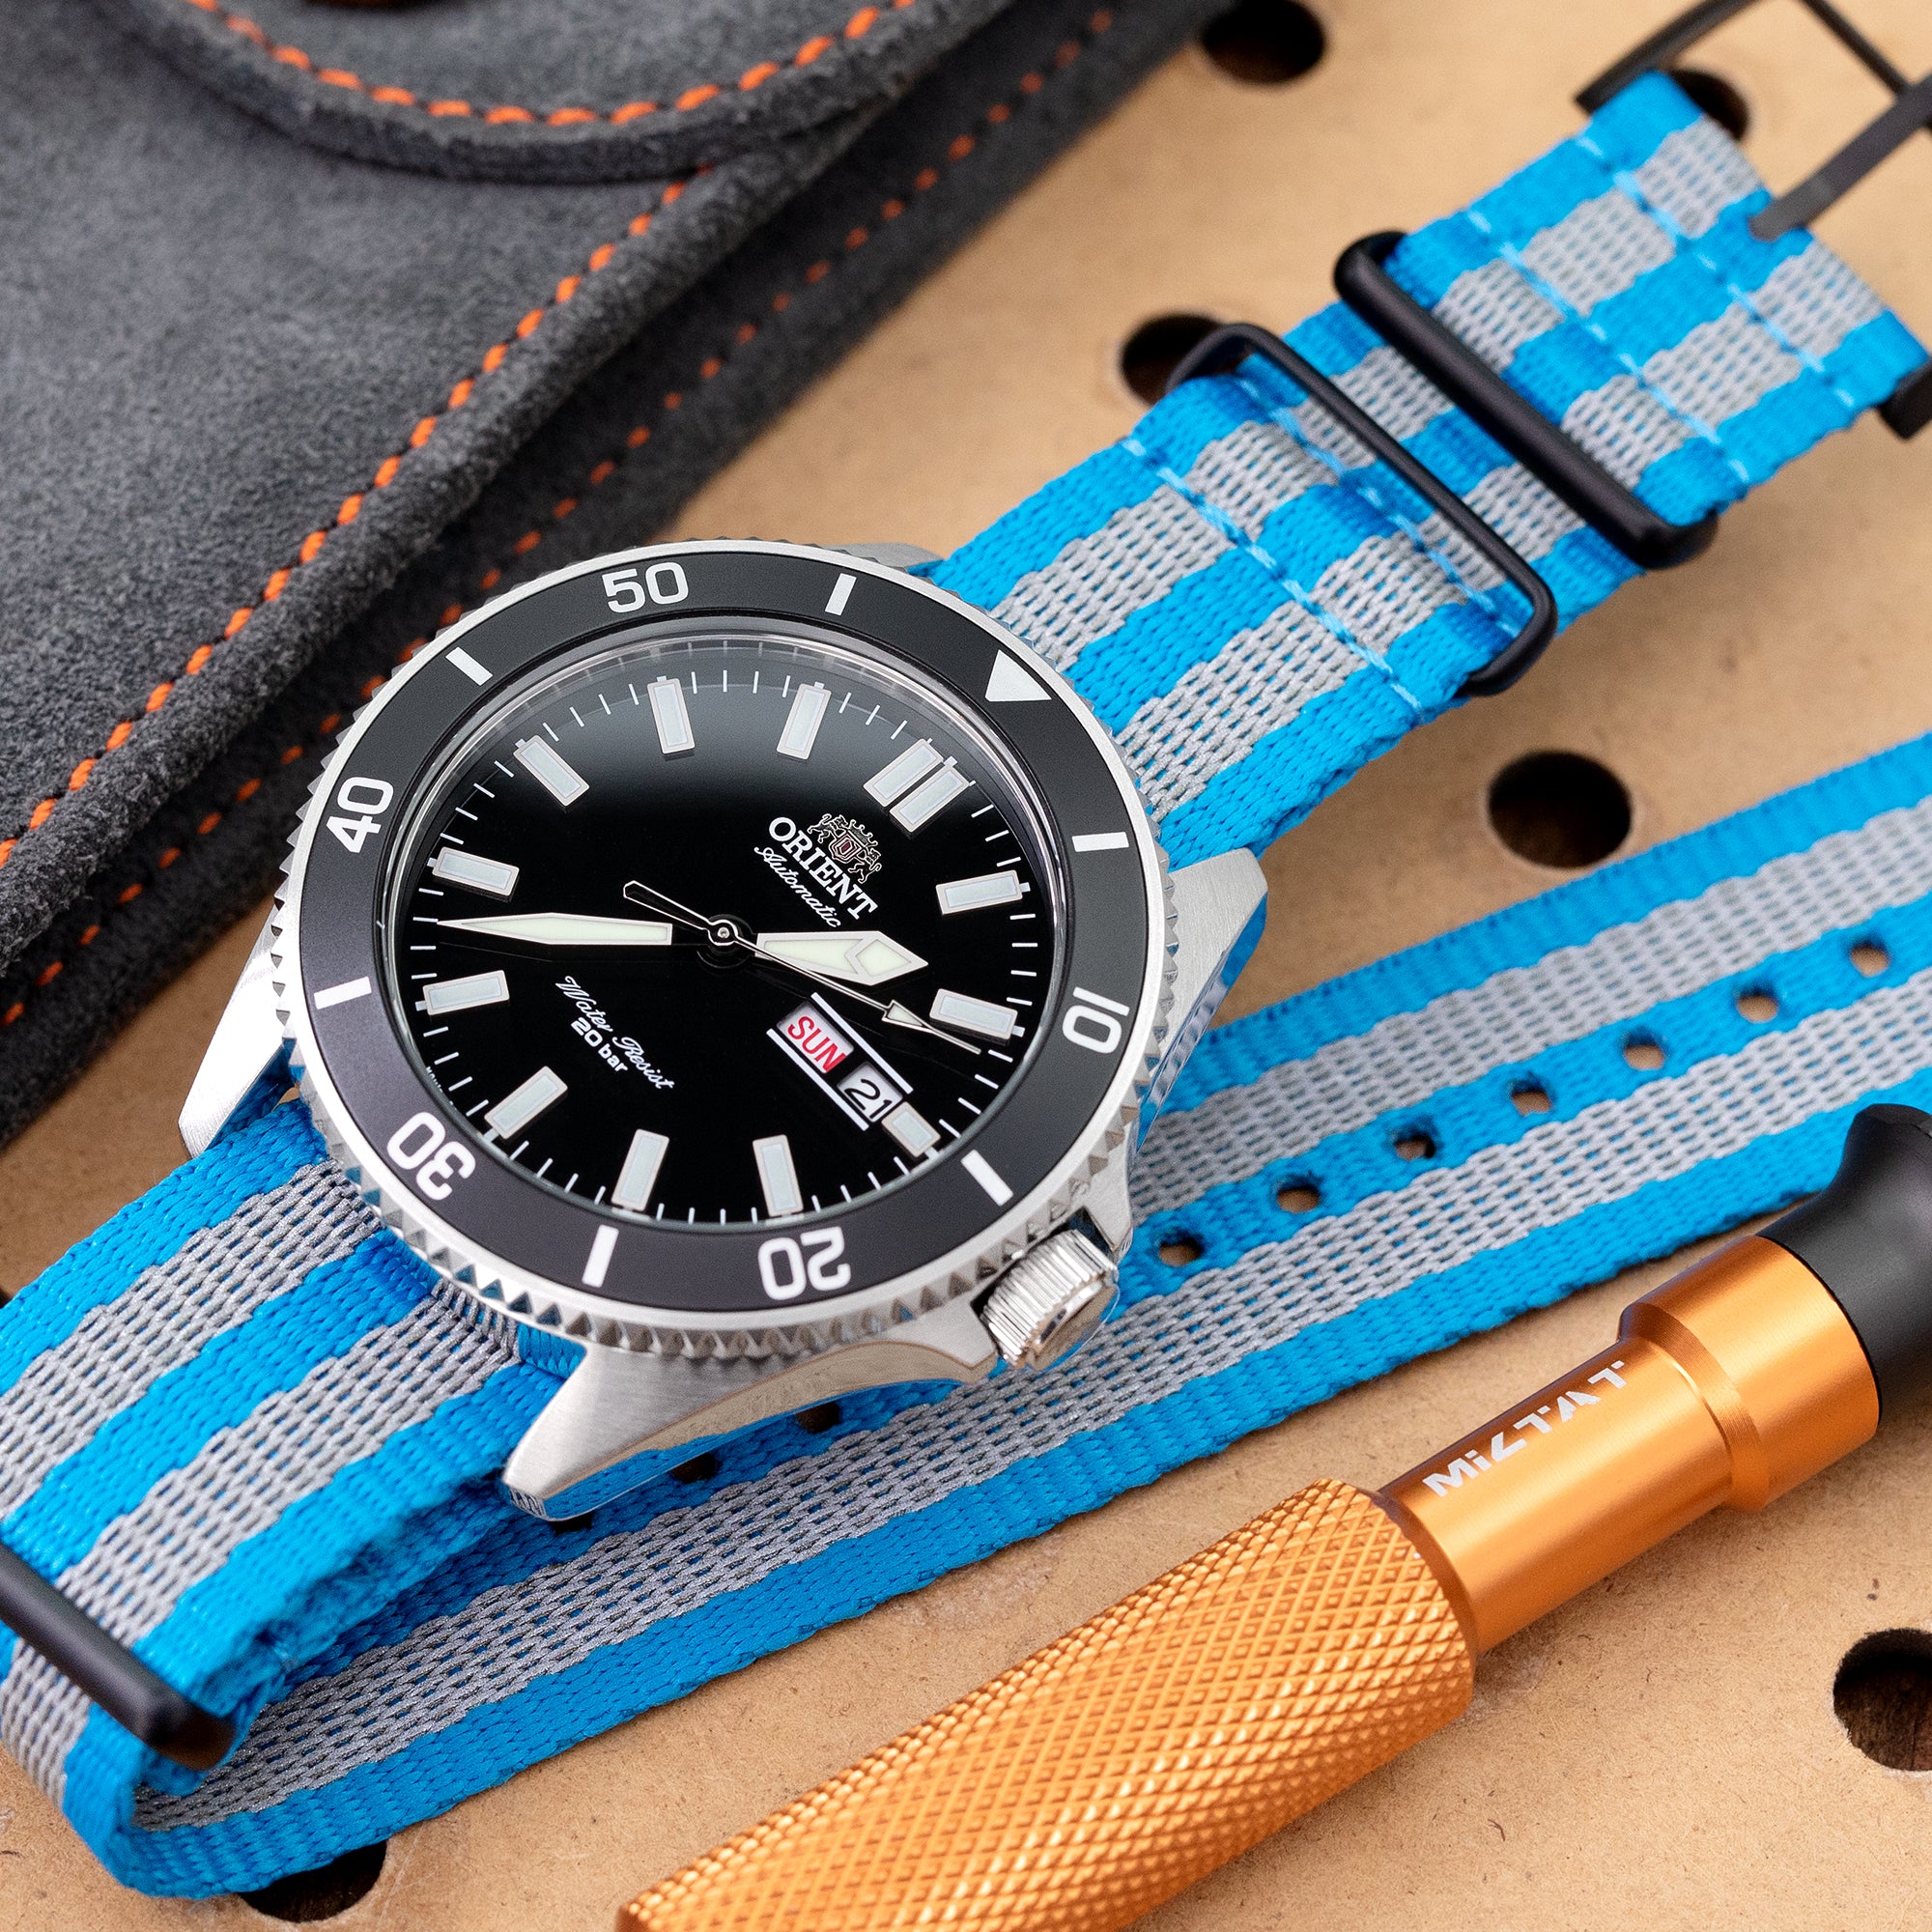 MiLTAT 22mm One-piece Nylon 3M Glow-in-the-Dark Watch Strap, PVD Black - Blue and Grey Stripes